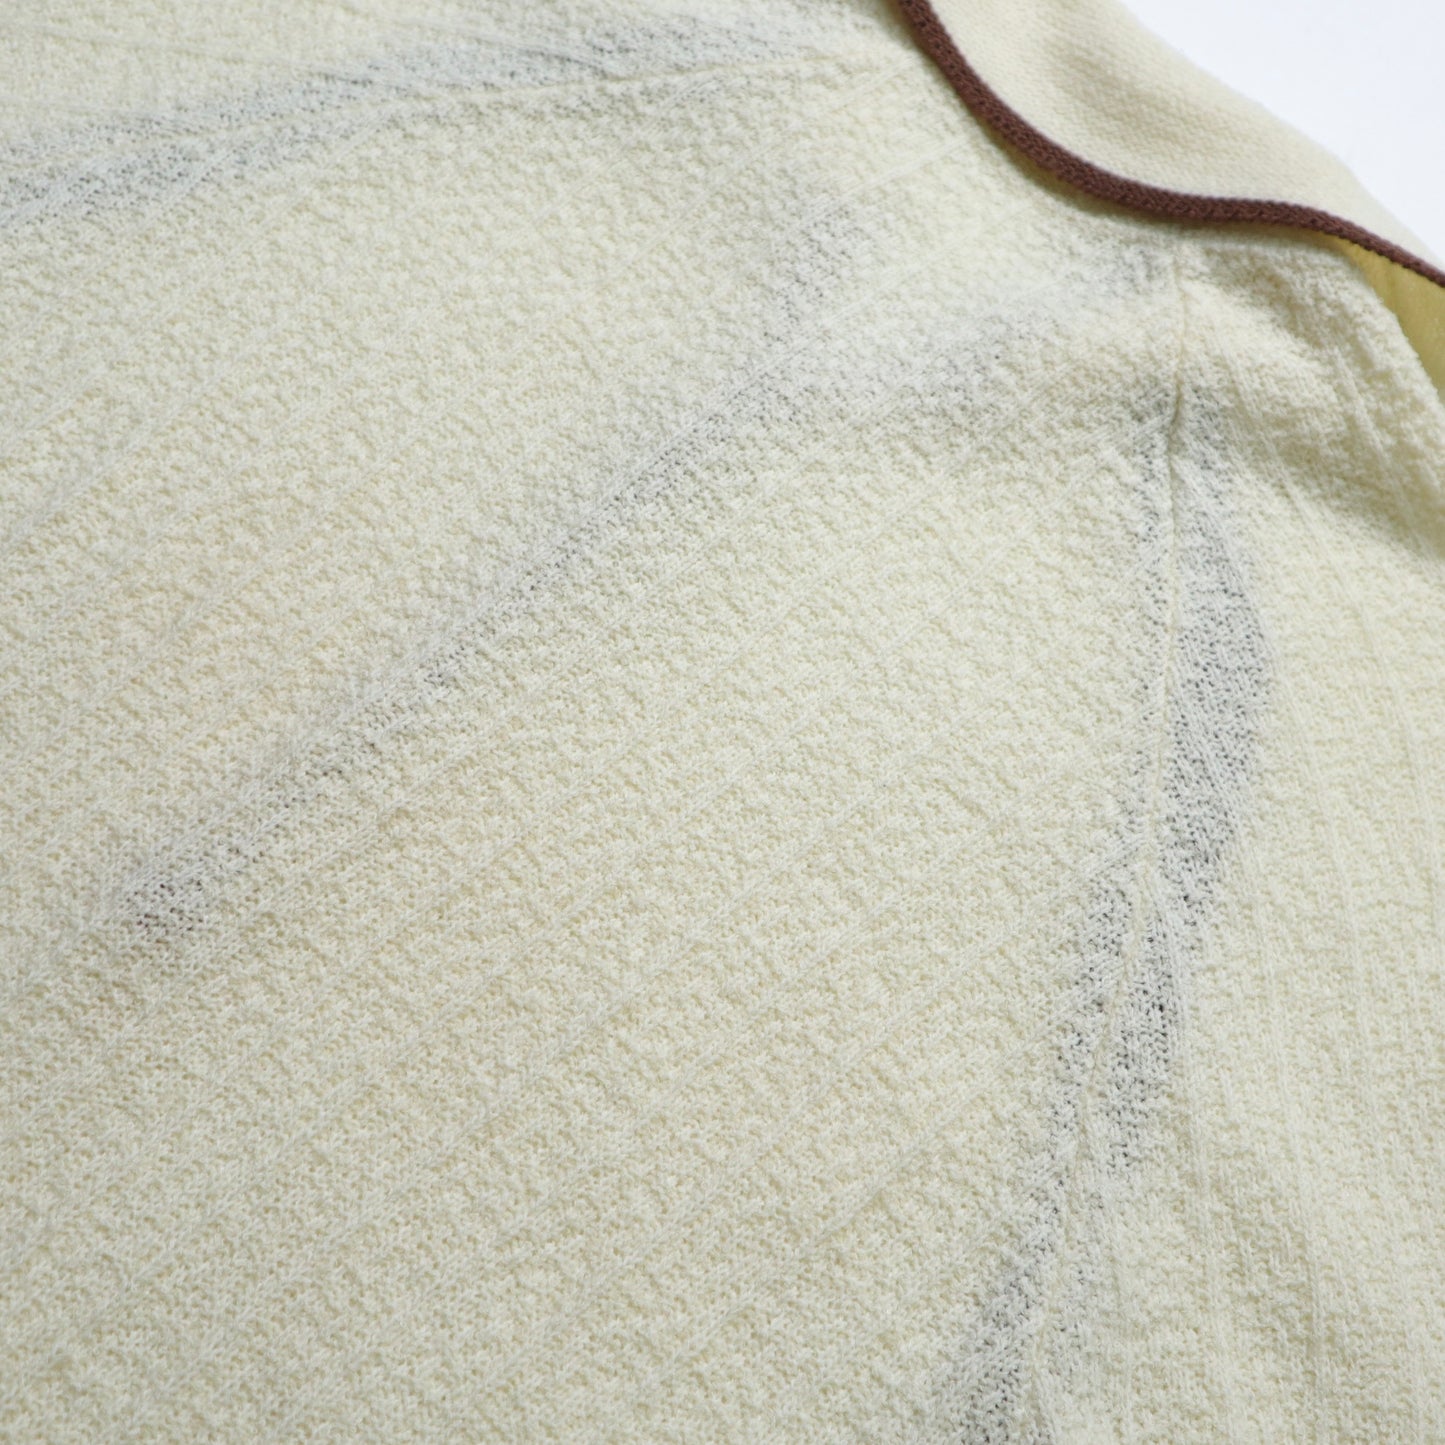 1970s 奶油白針織半拉鍊休閒polo衫